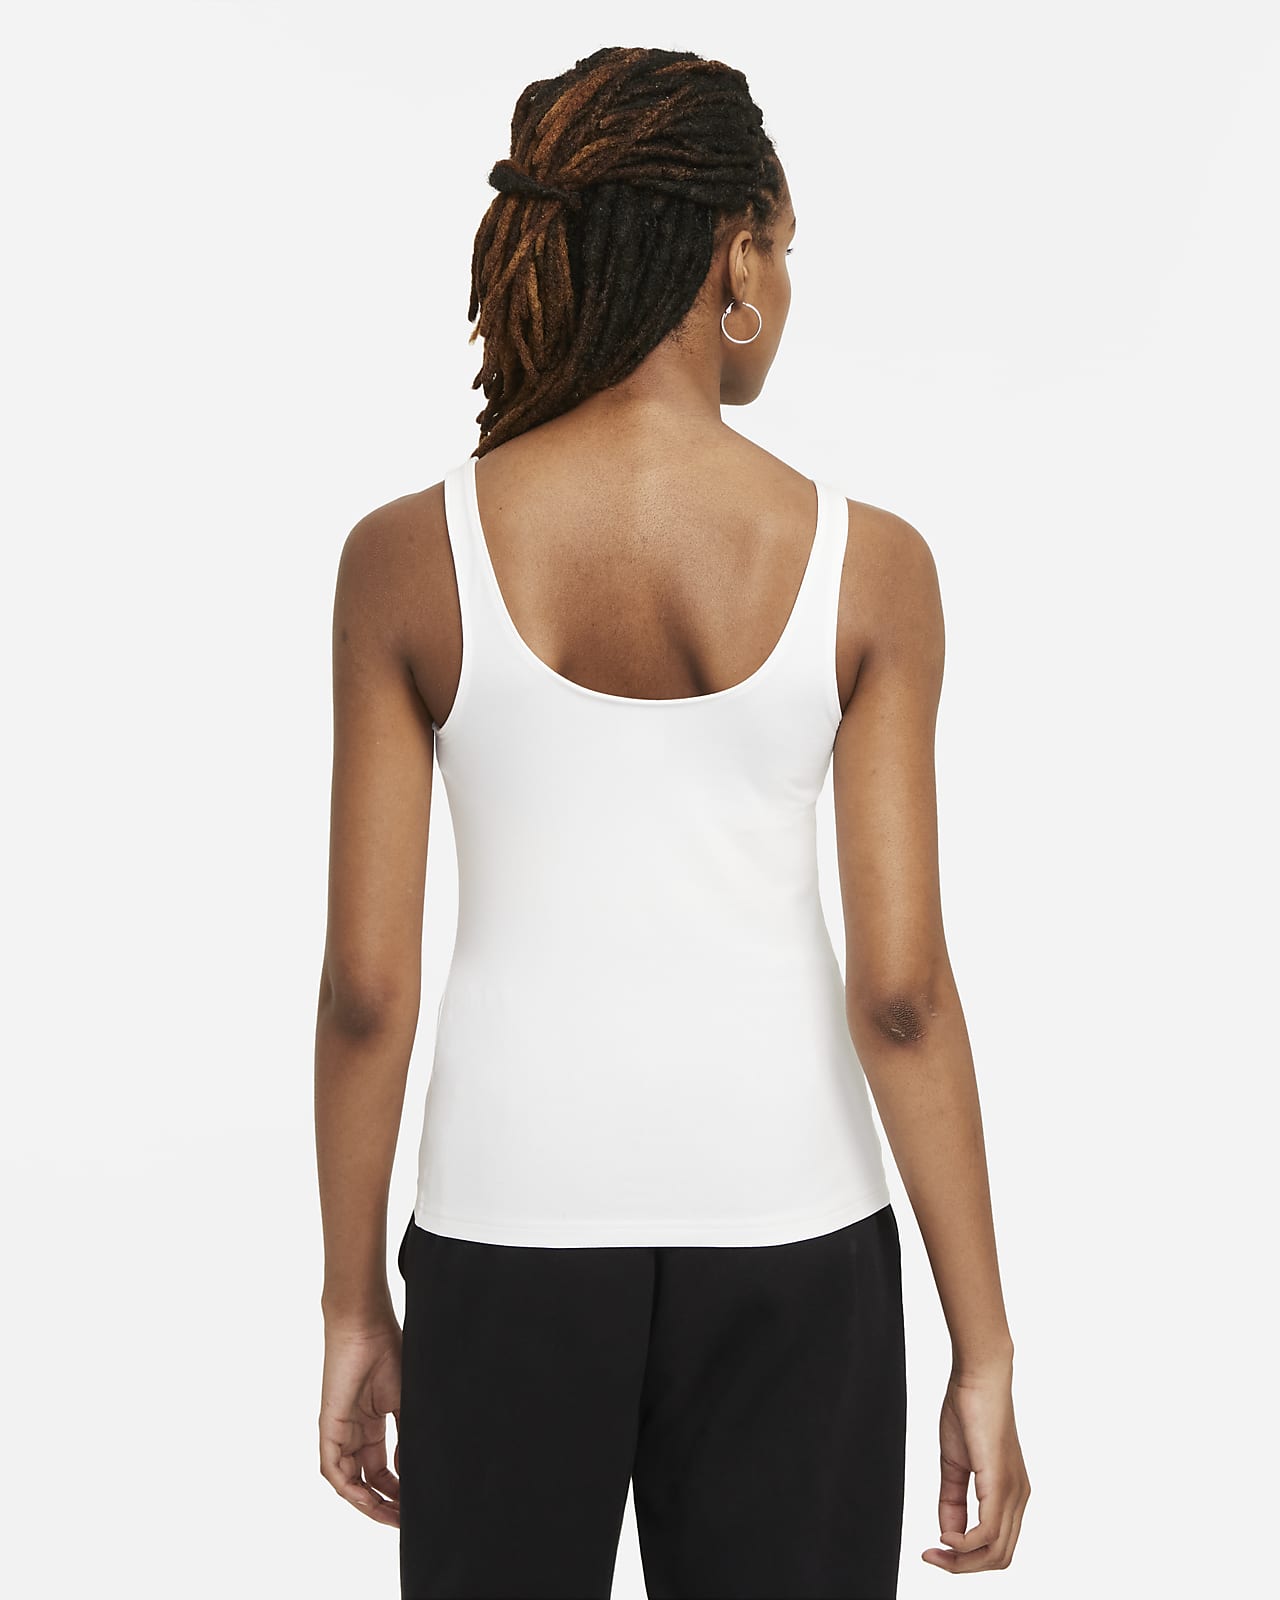 Explore Nike Women's Yoga Tank Tops & Sleeveless Shirts. Nike CH